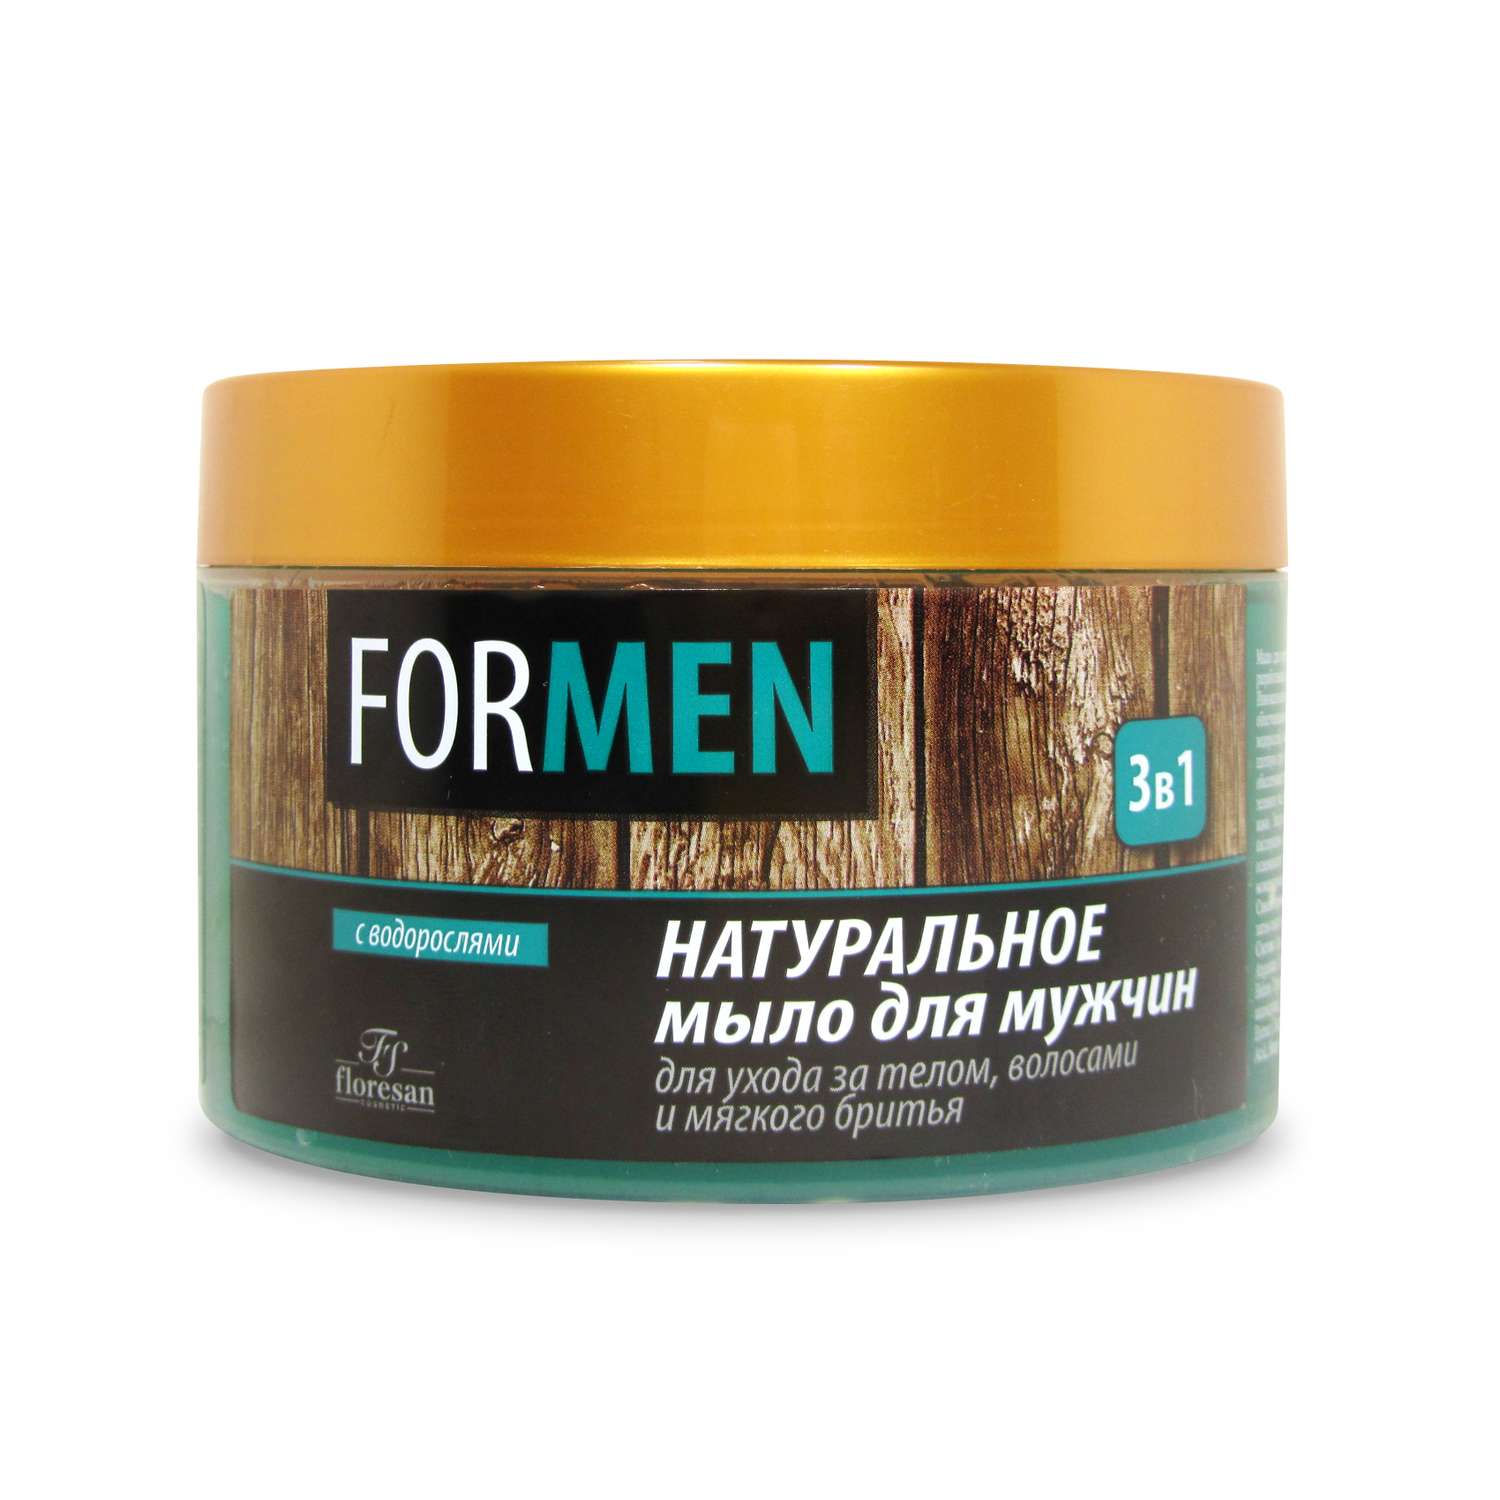 Мыло для ухода за кожей волосами и мягкого бритья Floresan 3в1 для мужчин 450г - фото 1